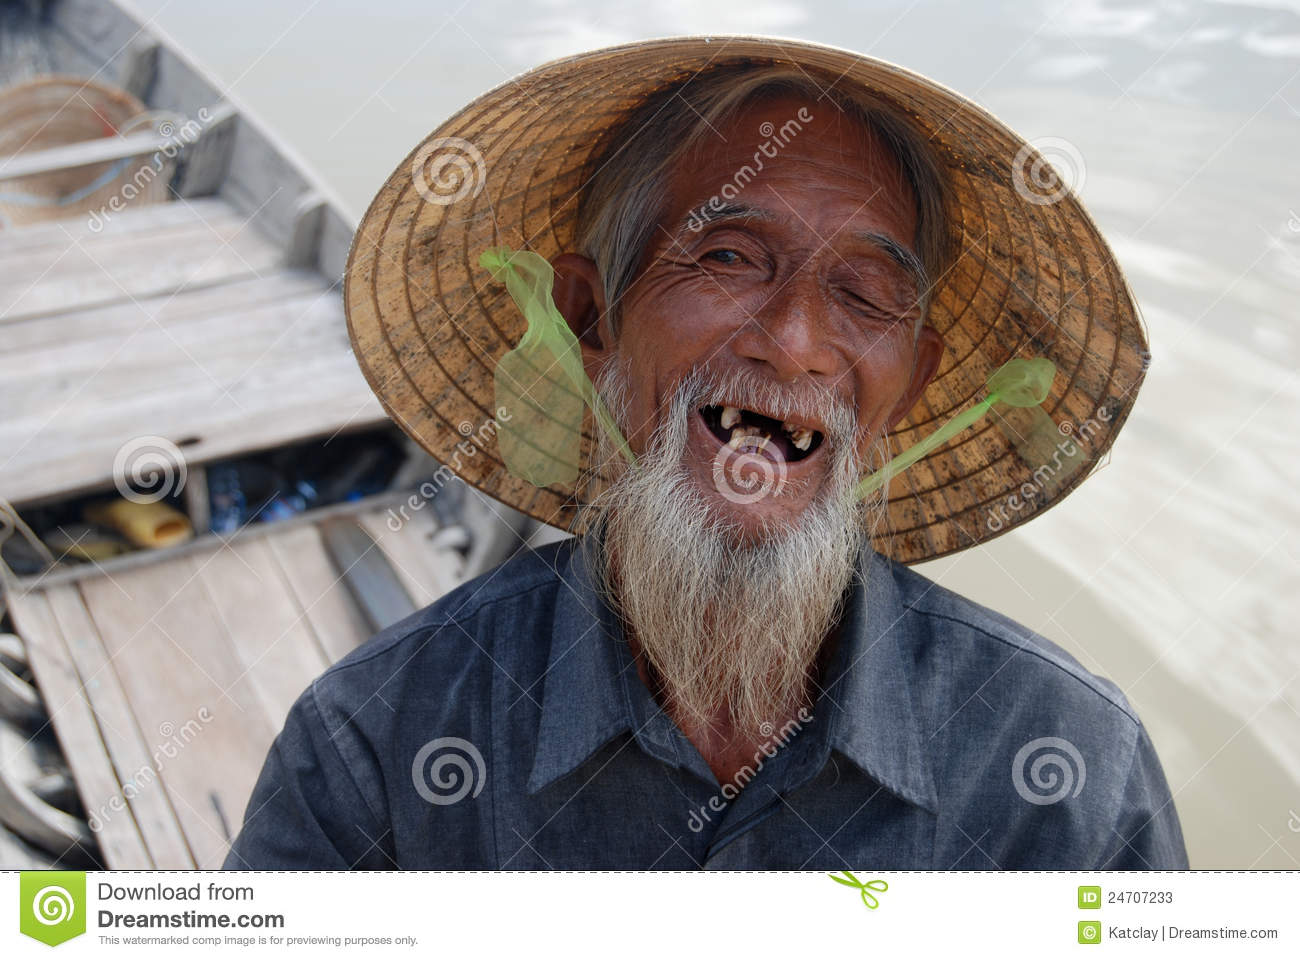 Stock Photos  Smiling Vietnamese Man  Image  24707233